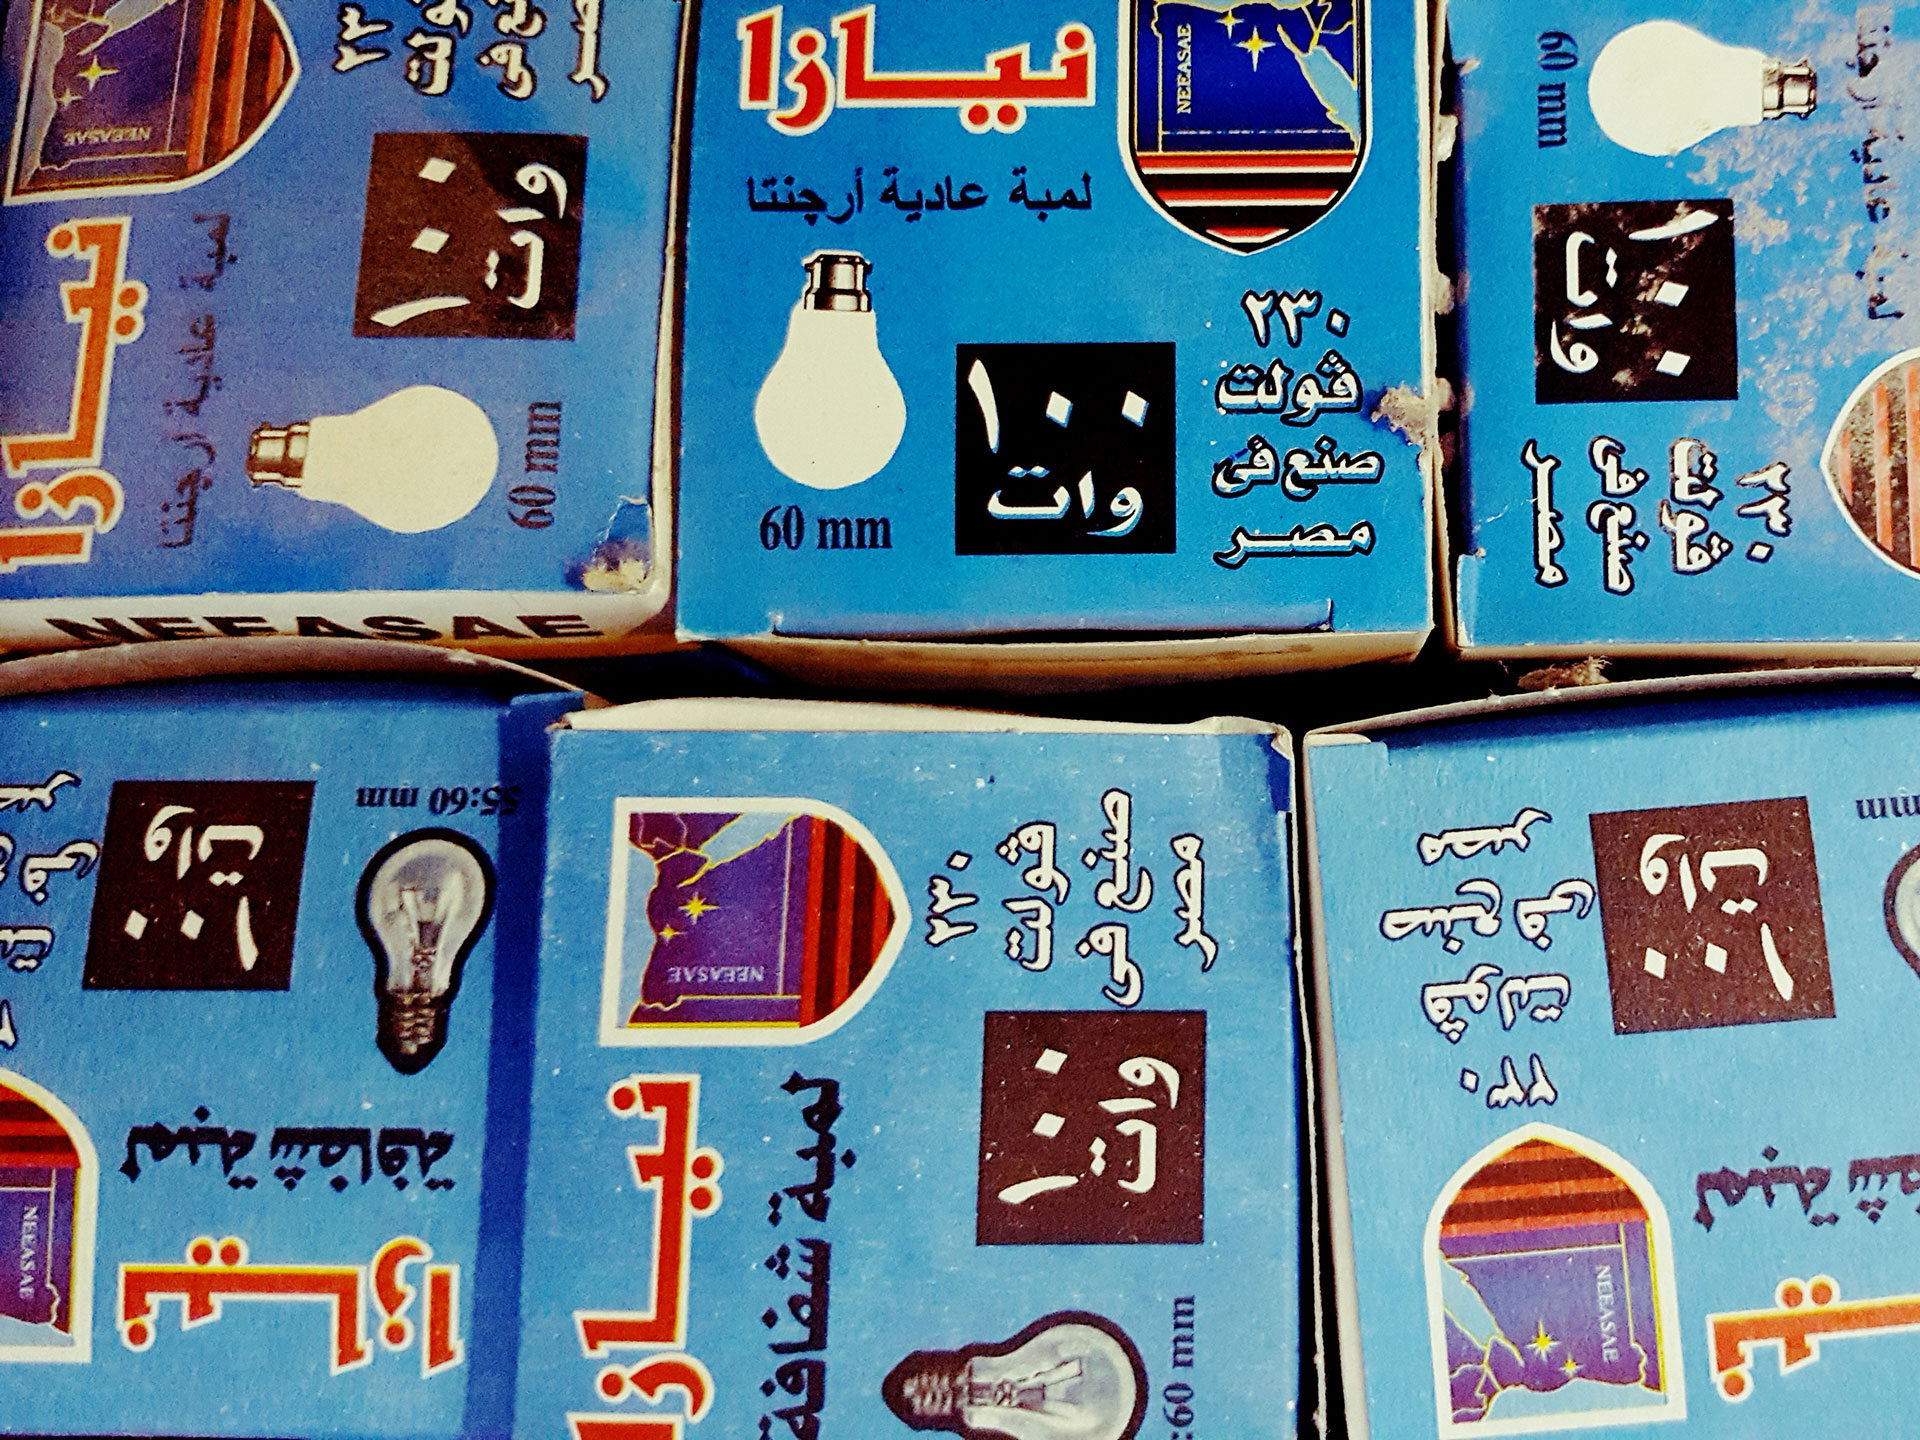 Egyptian lightbulb packets in bright blue